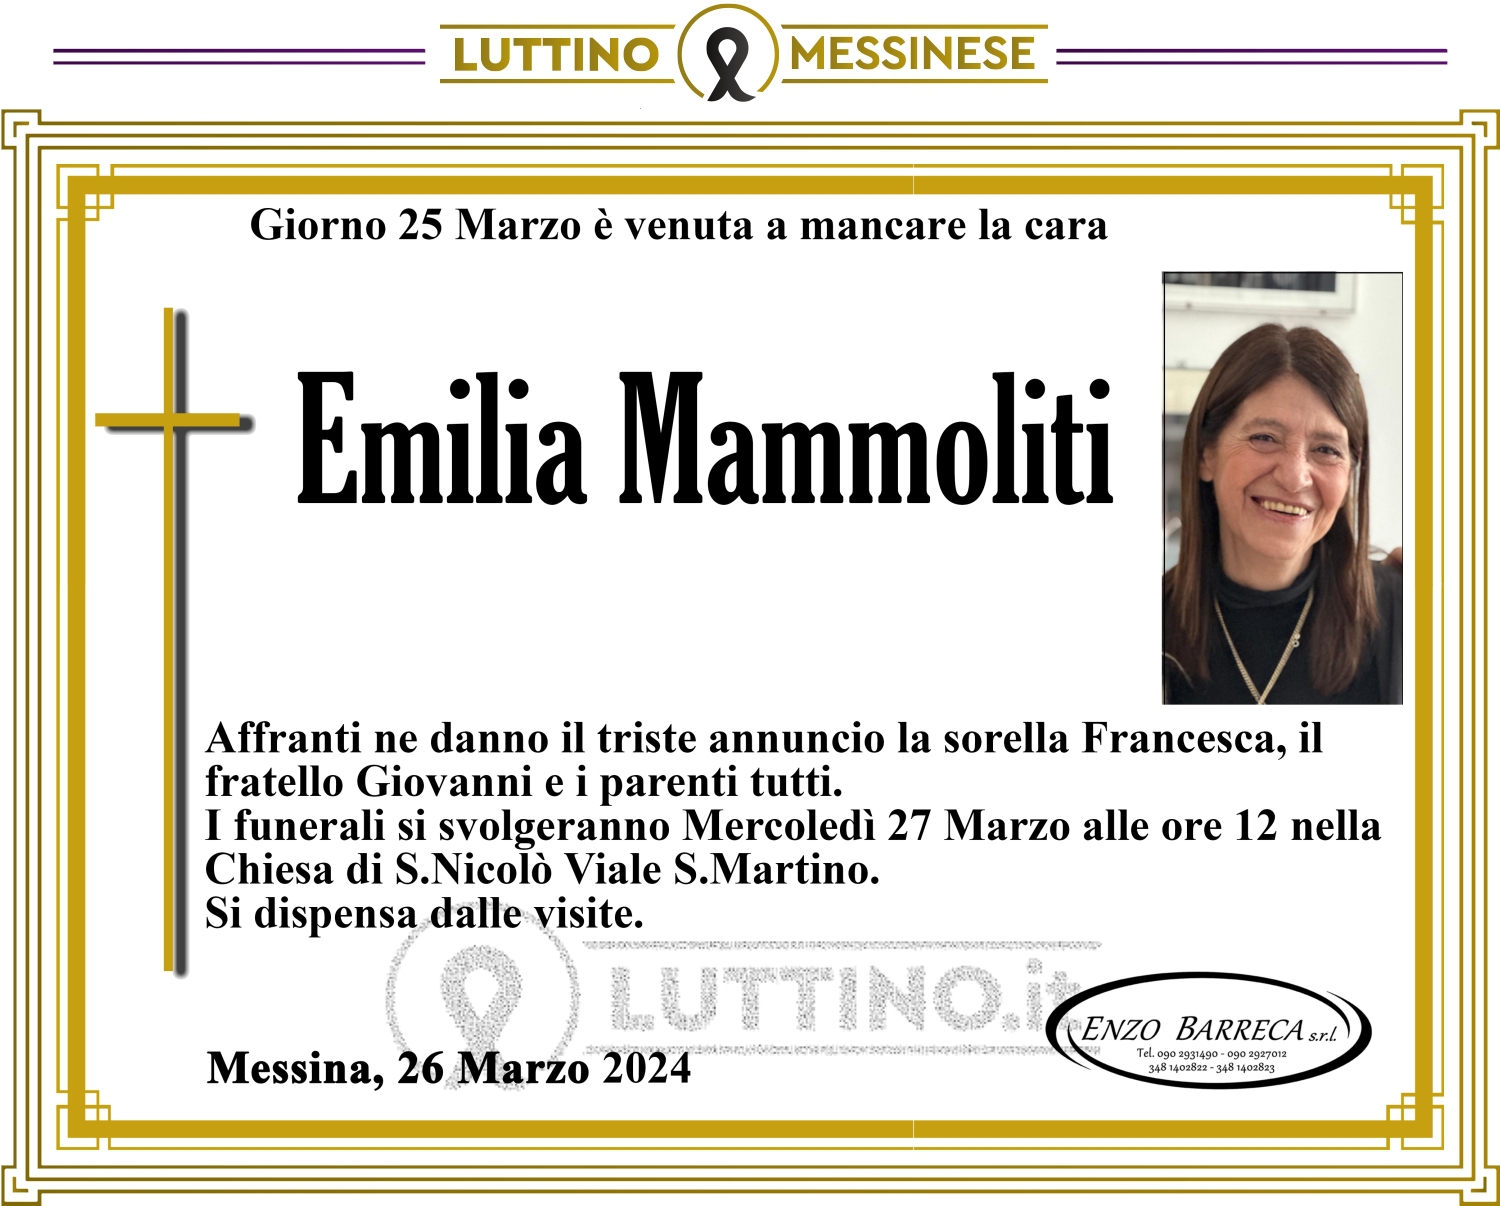 Emilia Mammoliti